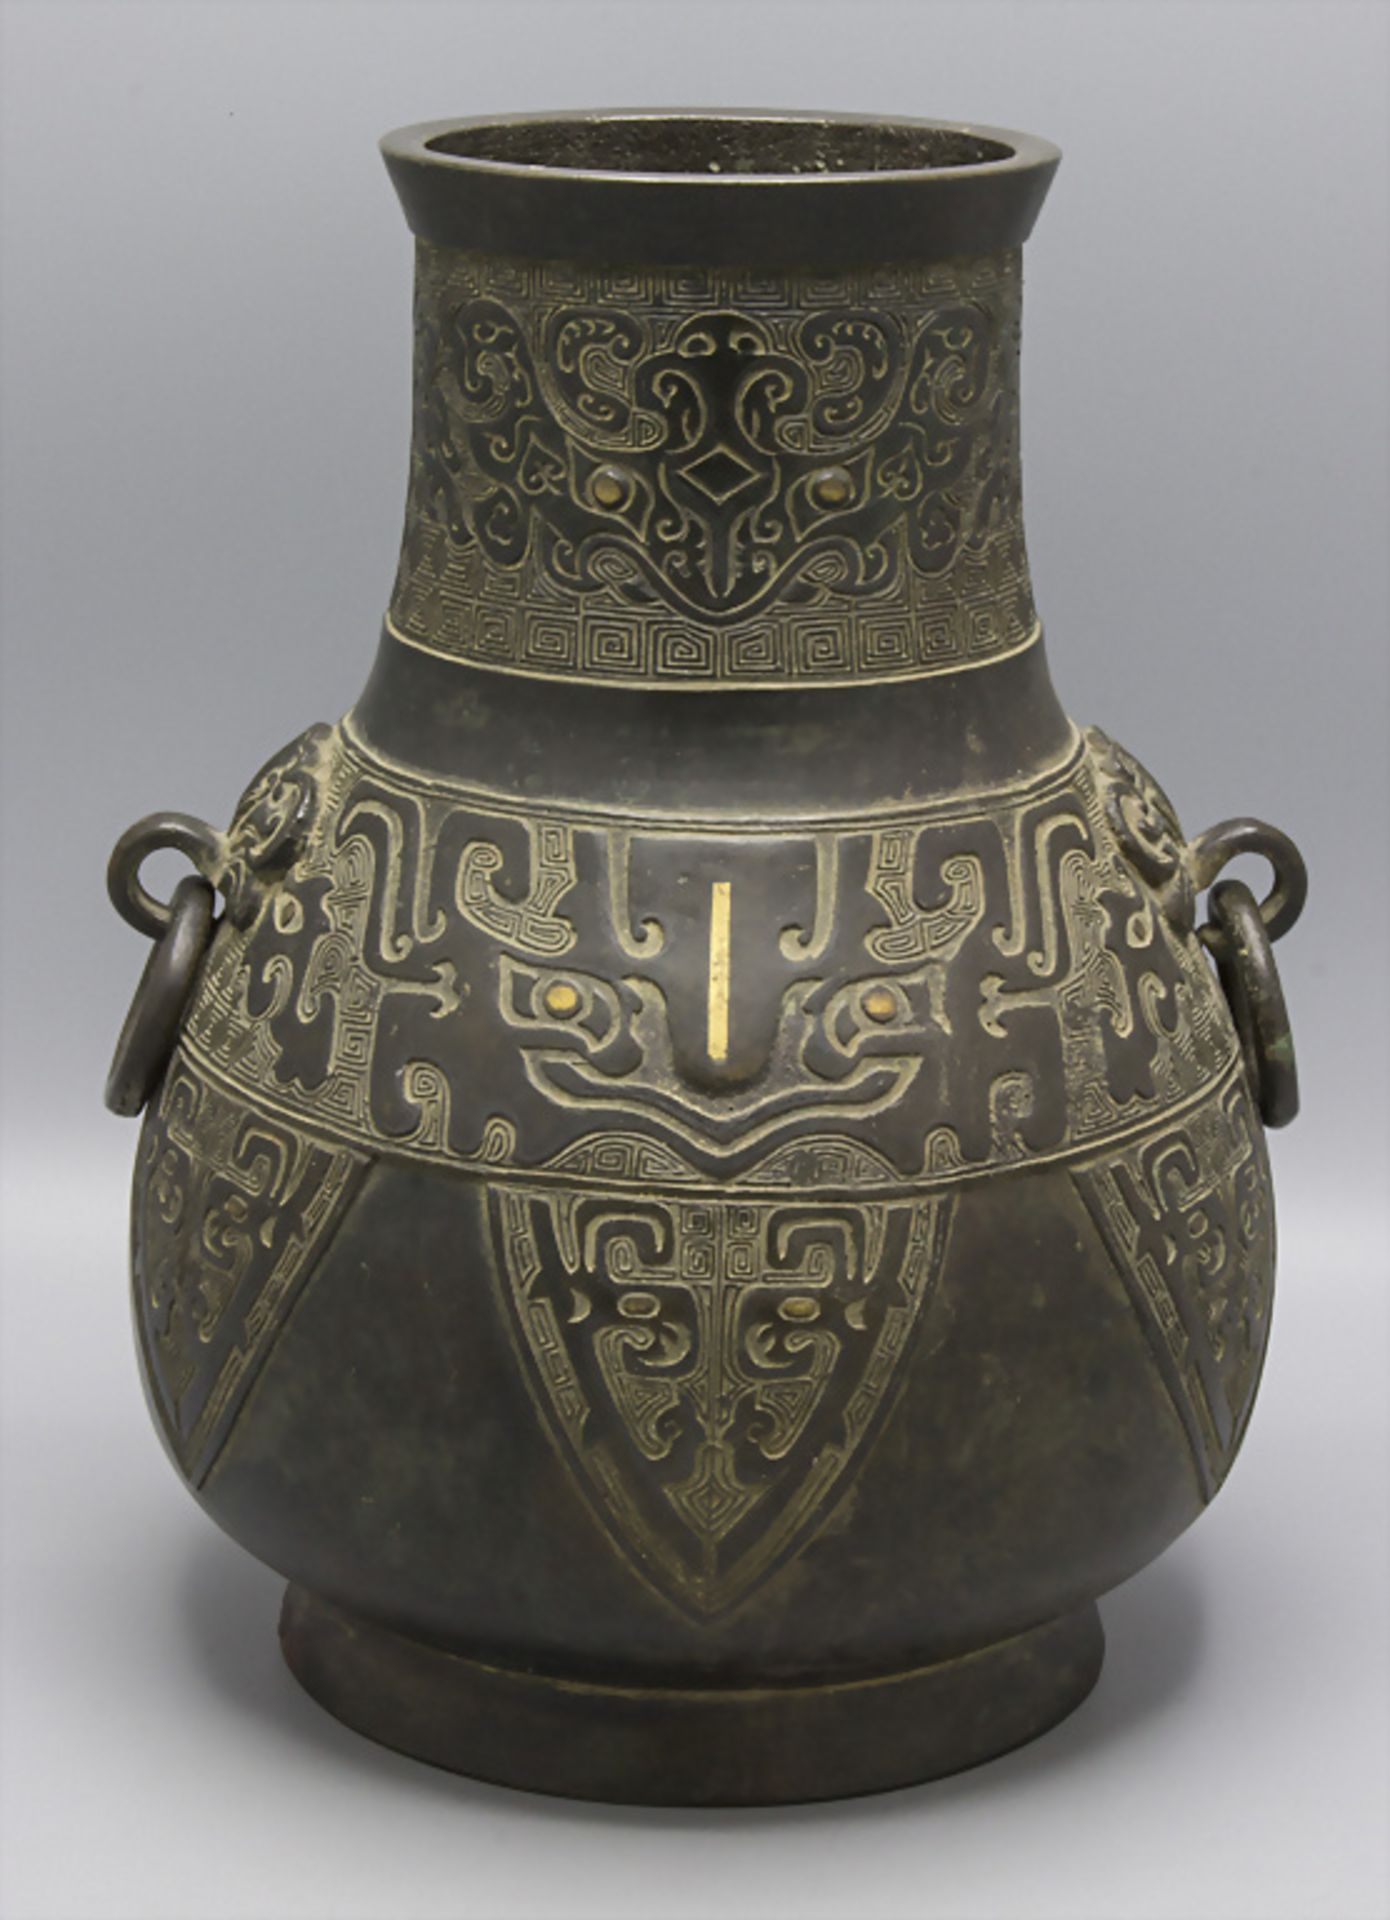 Zweihenkelvase / A two-handle vase, China, frühe Qing Dynastie (1644-1911), 17./18. Jh.